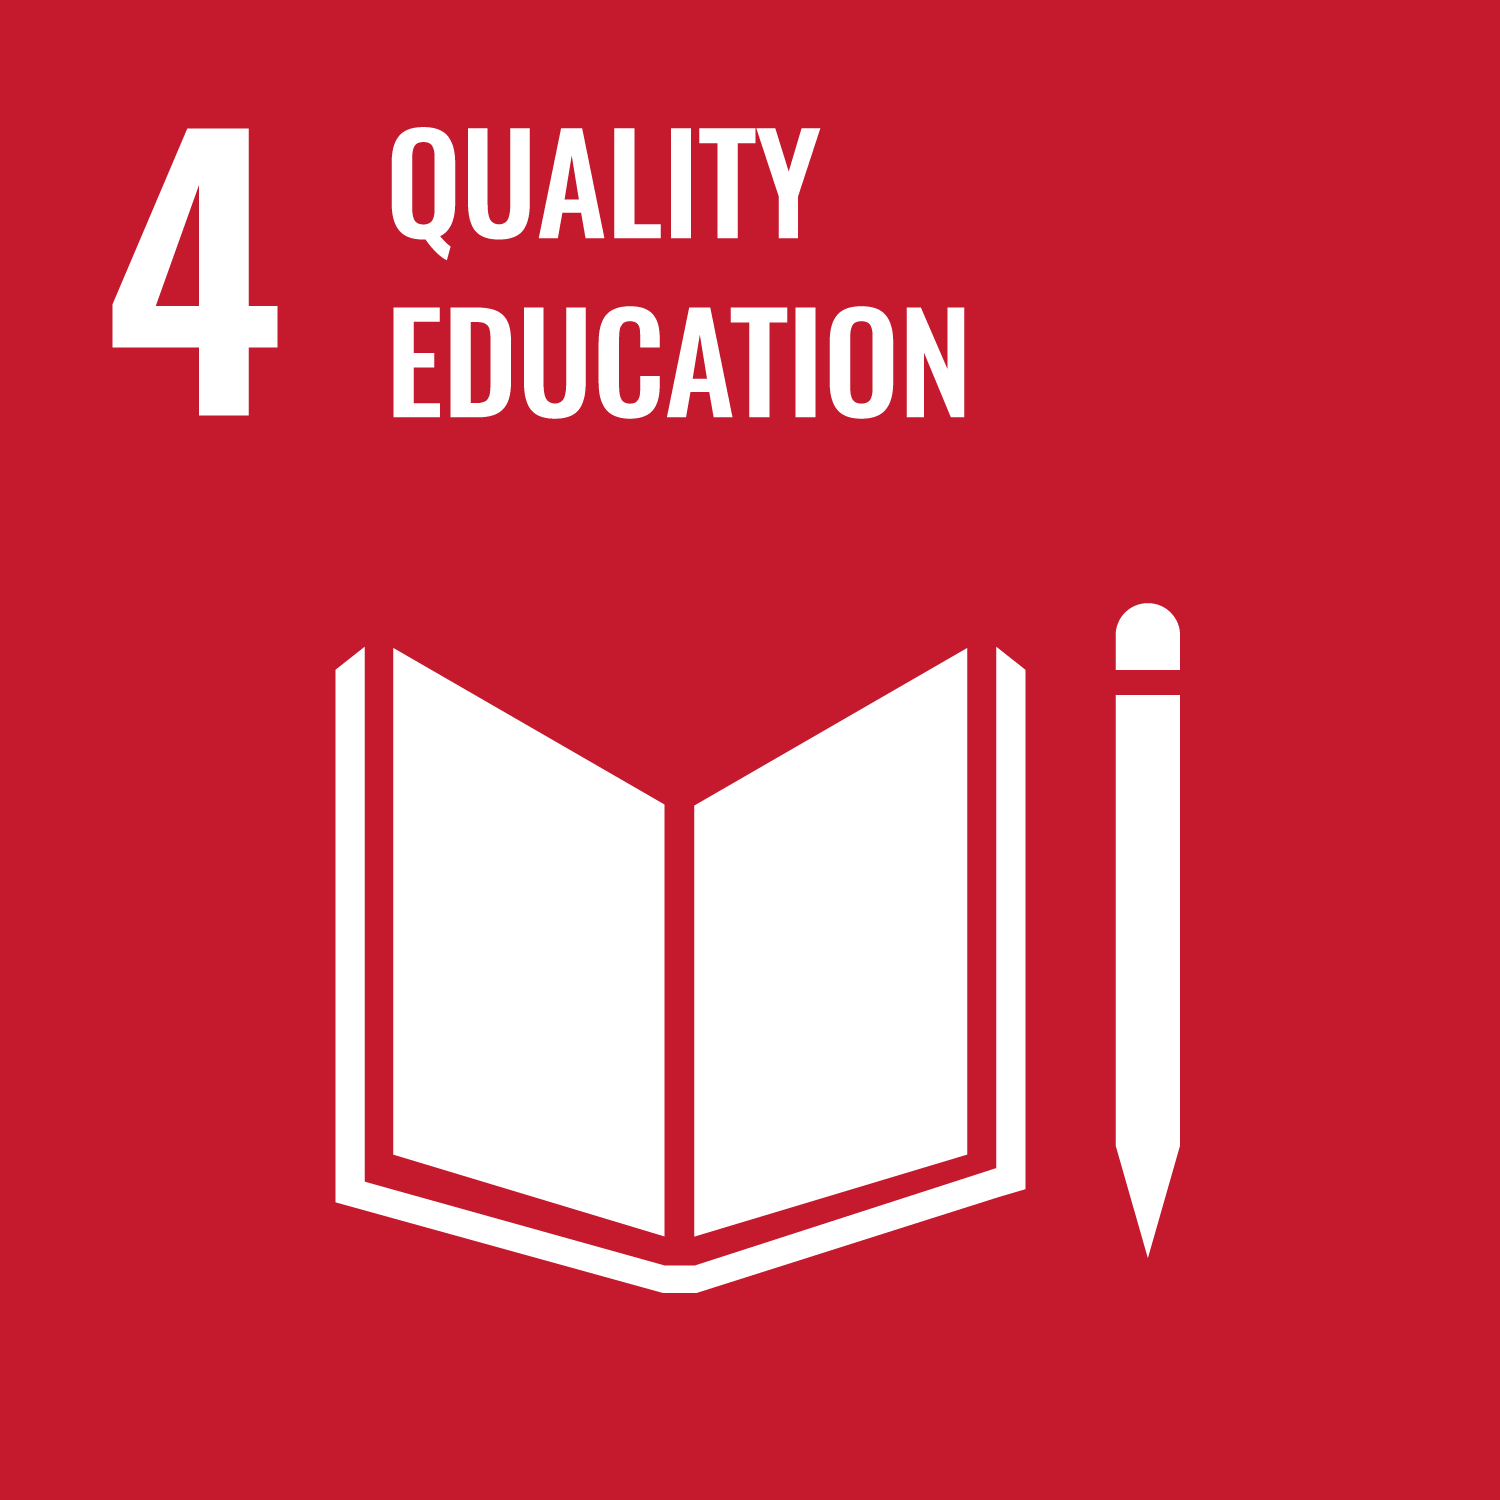 Sustainable Development Goals (SDG4) Quality Education